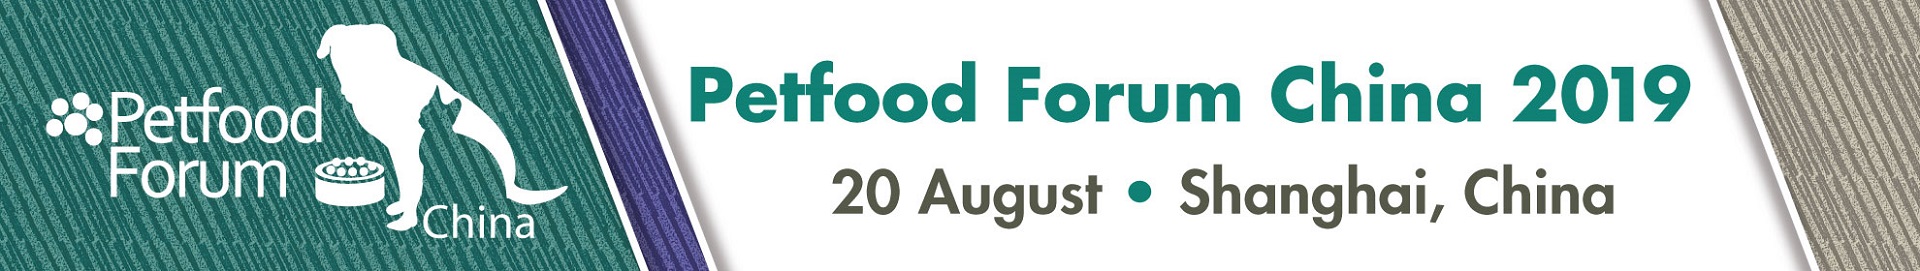 Petfood Forum China 2019 Event Banner